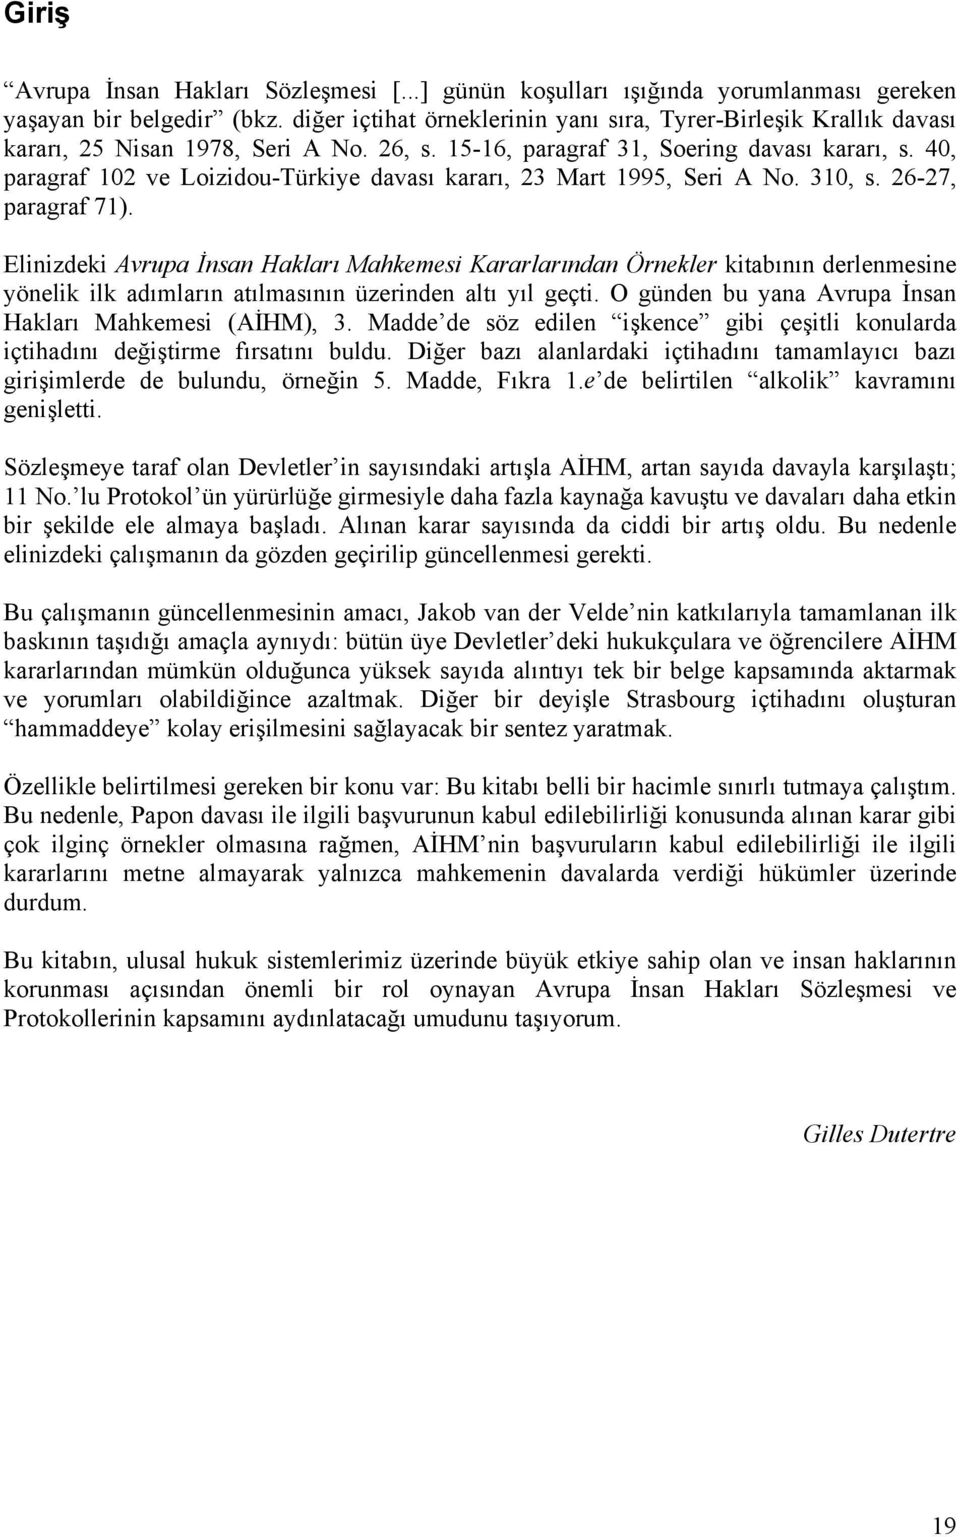 40, paragraf 102 ve Loizidou-Türkiye davası kararı, 23 Mart 1995, Seri A No. 310, s. 26-27, paragraf 71).